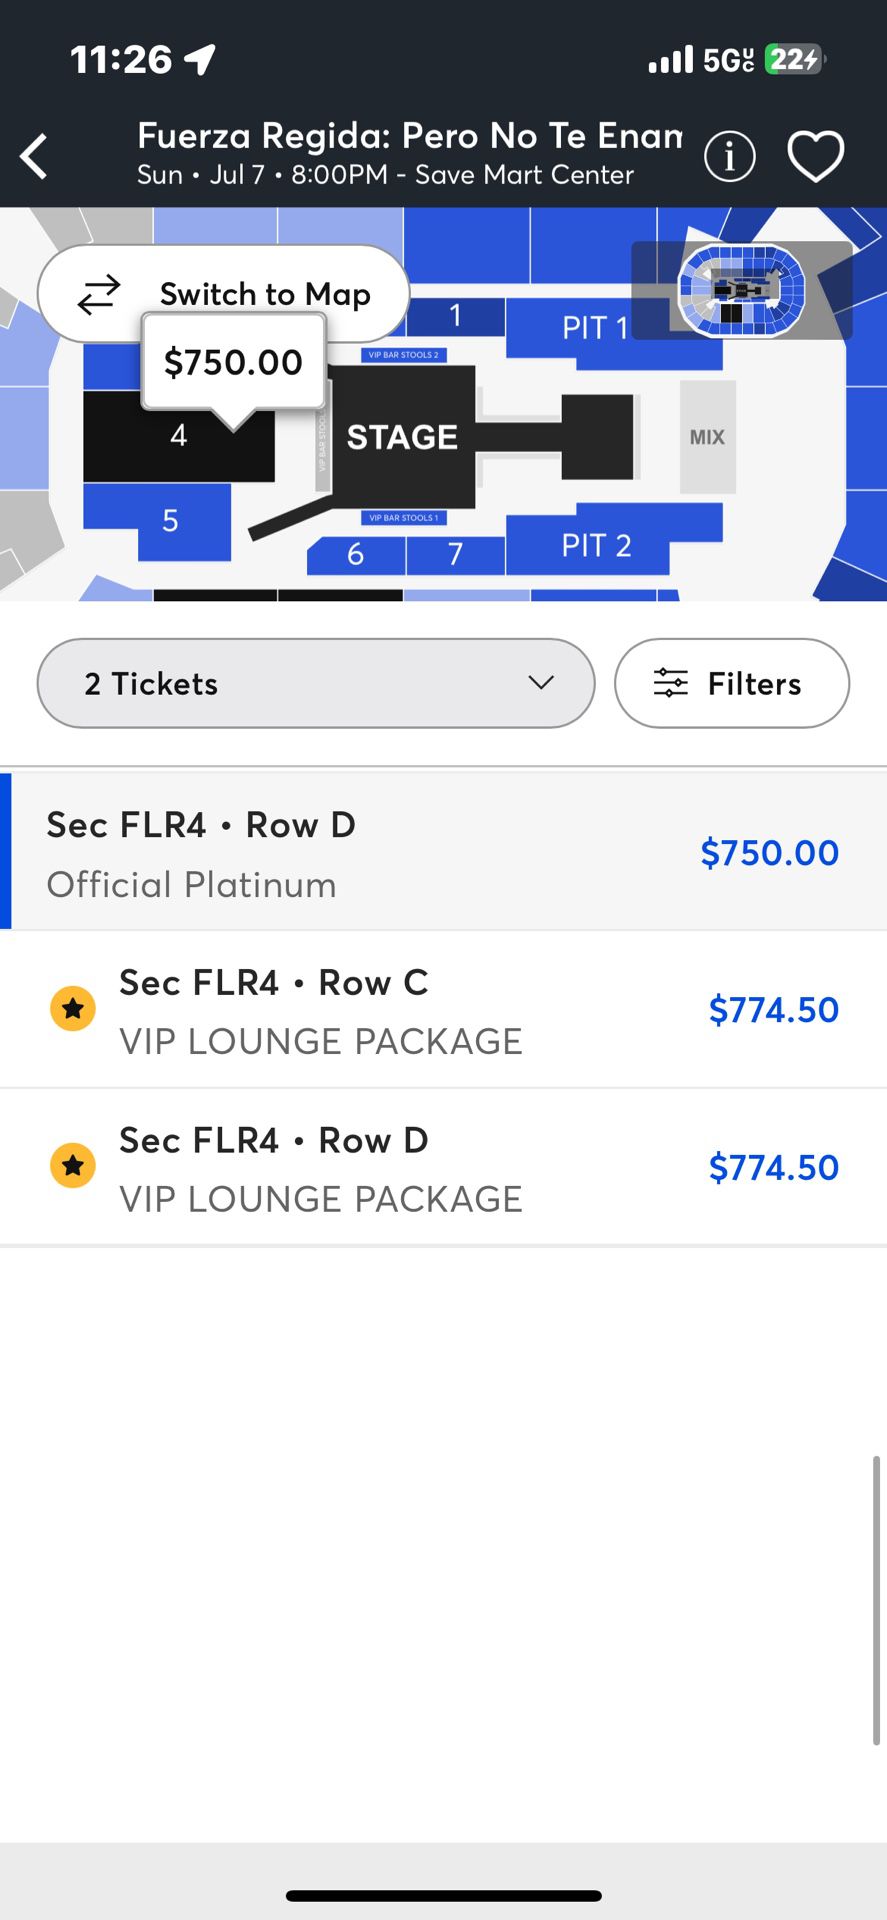 Fuerza Regida VIP Floor Seat Tickets $600 For 2 